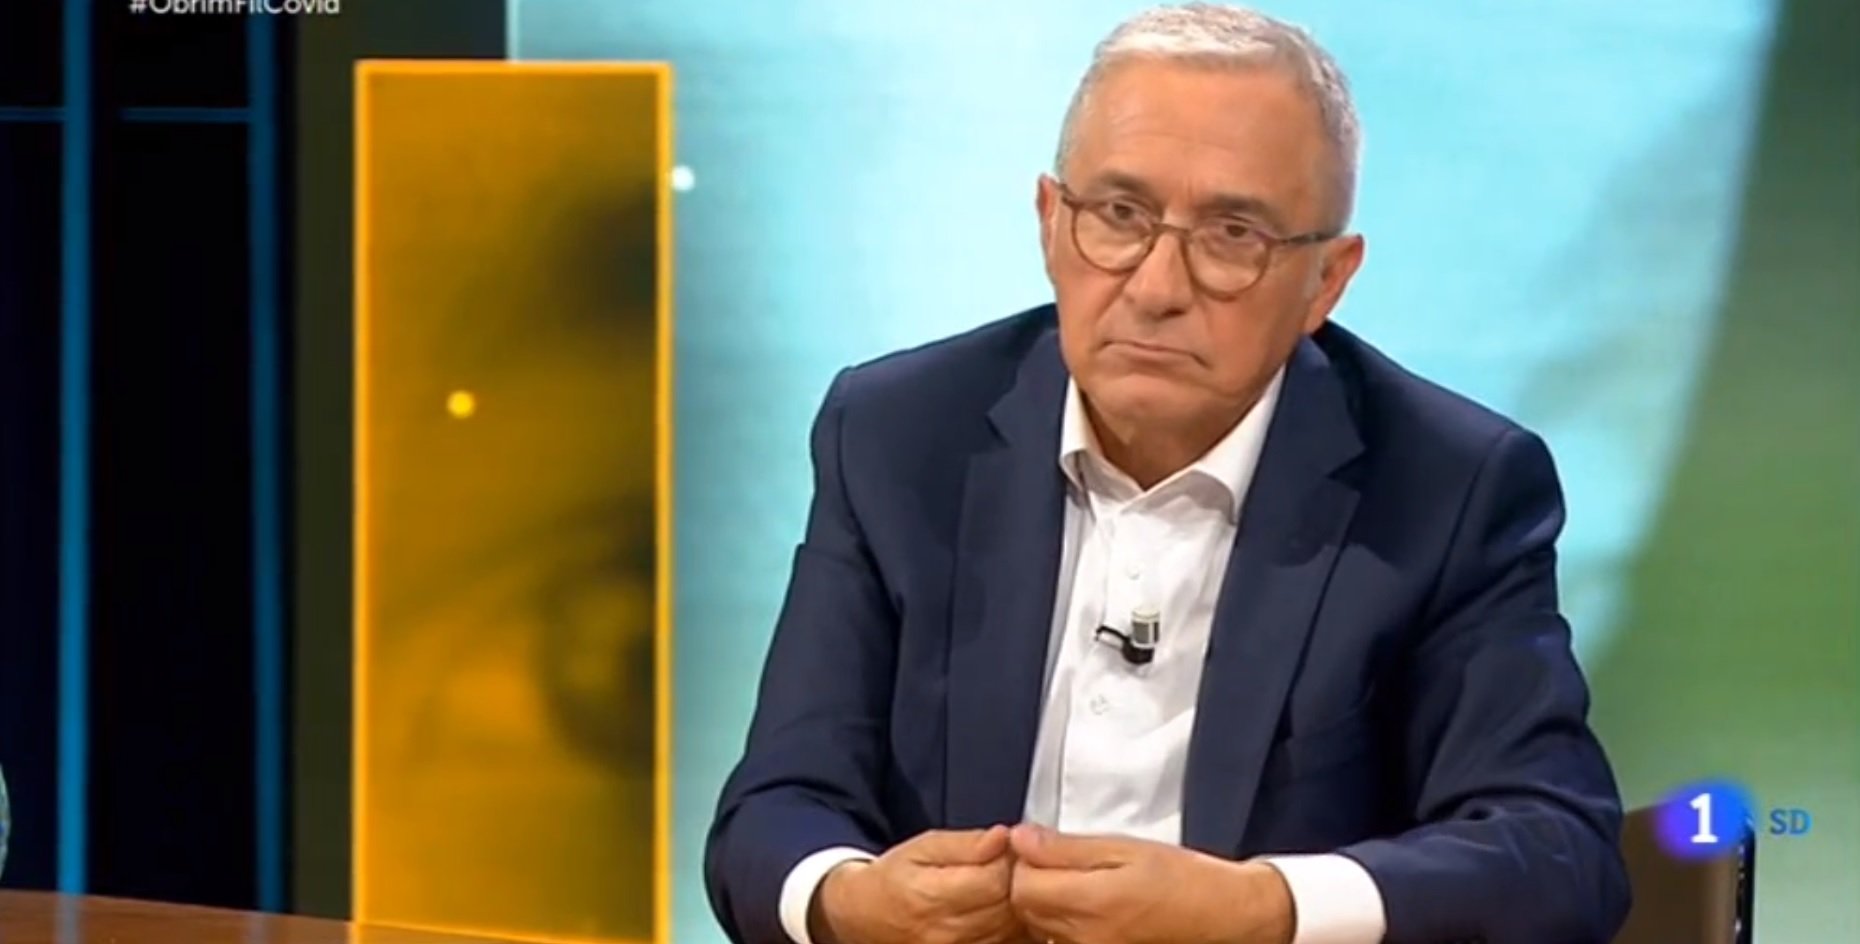 Xavier Sardà, líder d'audiència, amenaça TV3 i tem "Si ningú ho evita, seguiré"